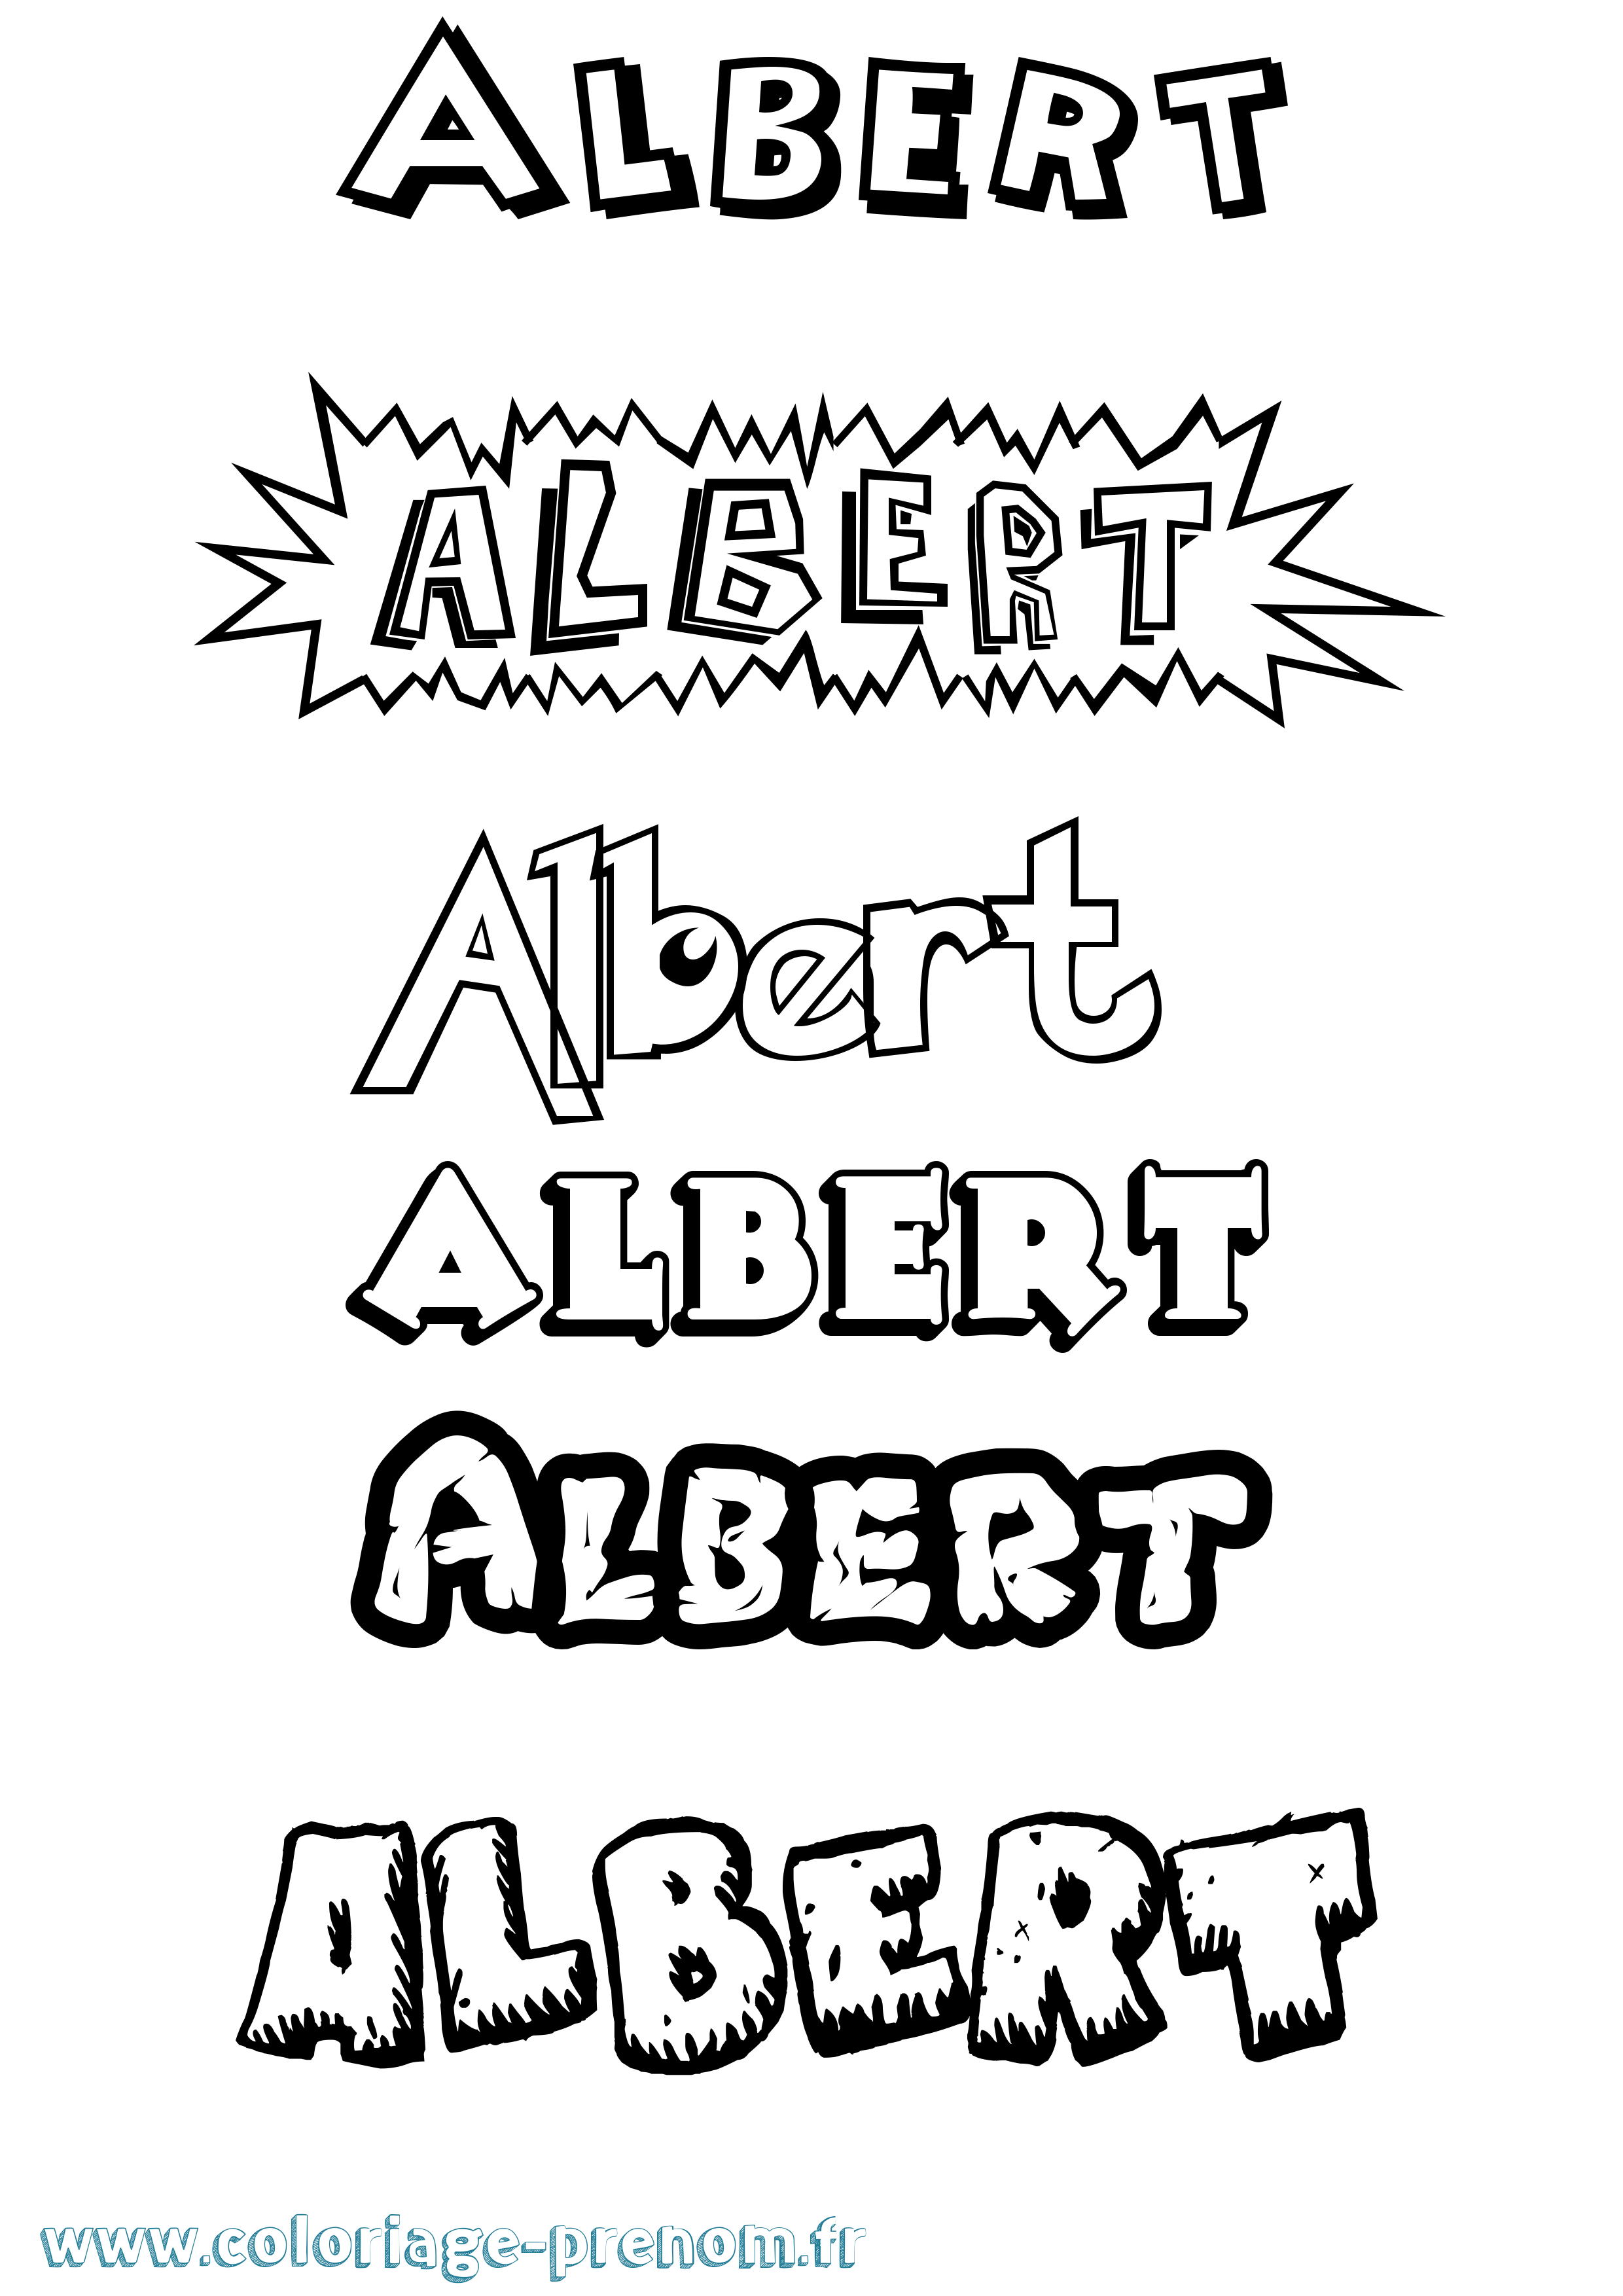 Coloriage prénom Albert